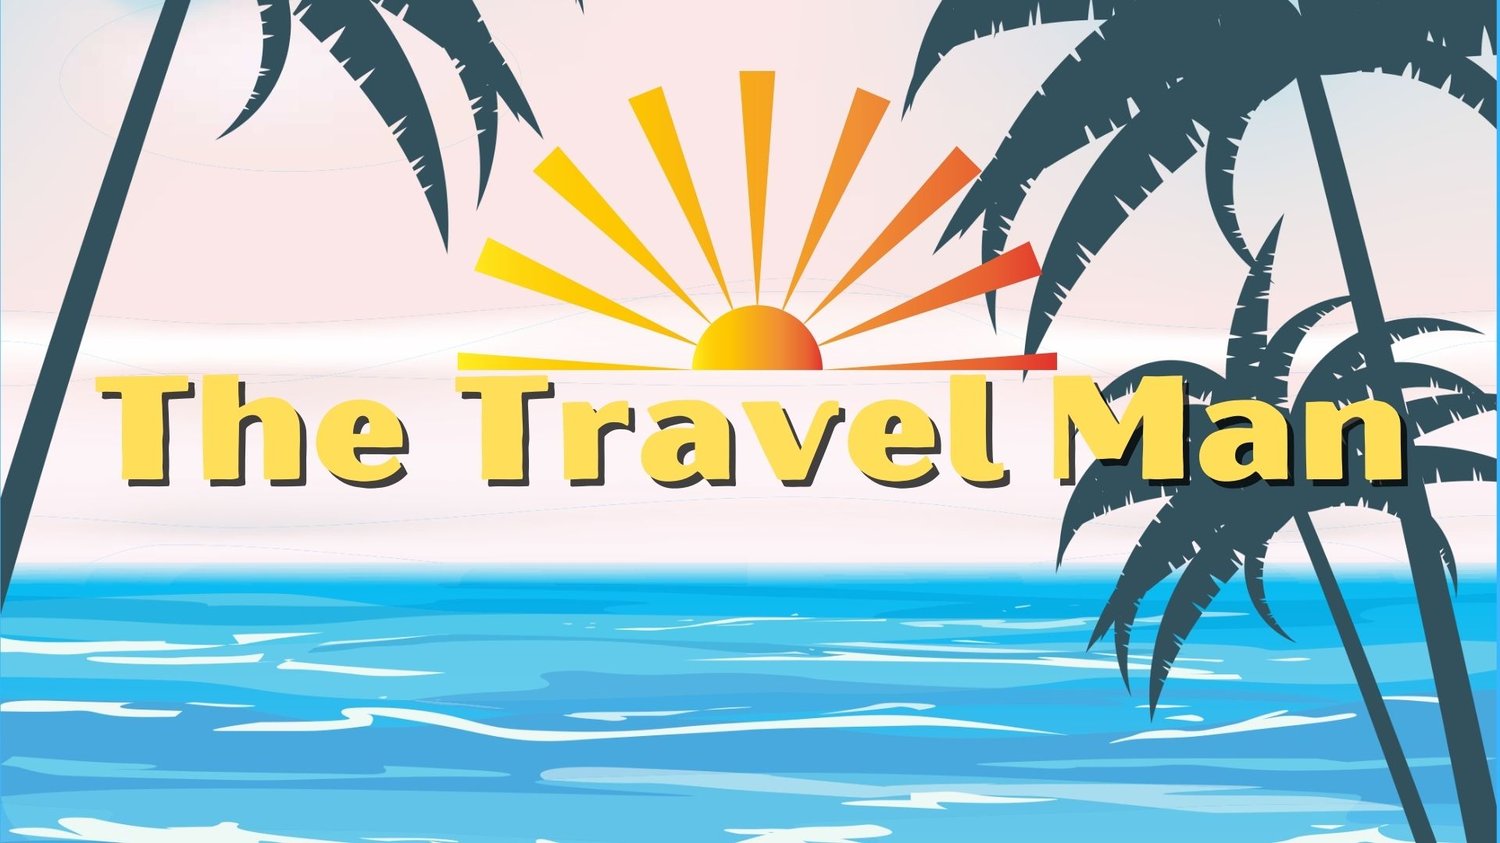 The travel man logo - https://thetravelman.info/